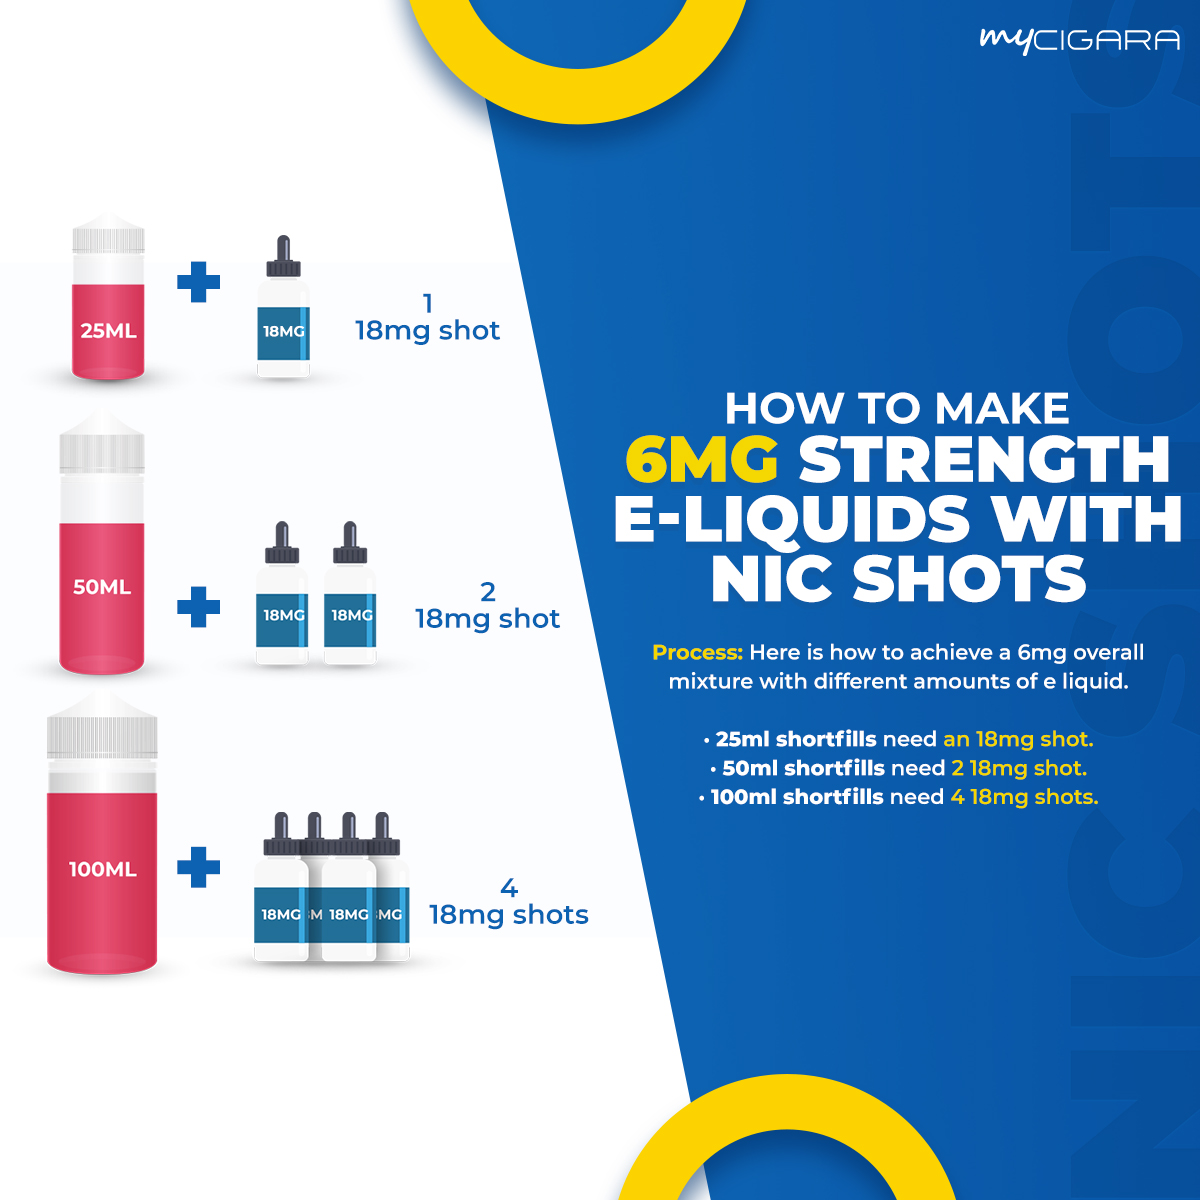 How to Make 6mg Strength E-liquids With Nic Shots